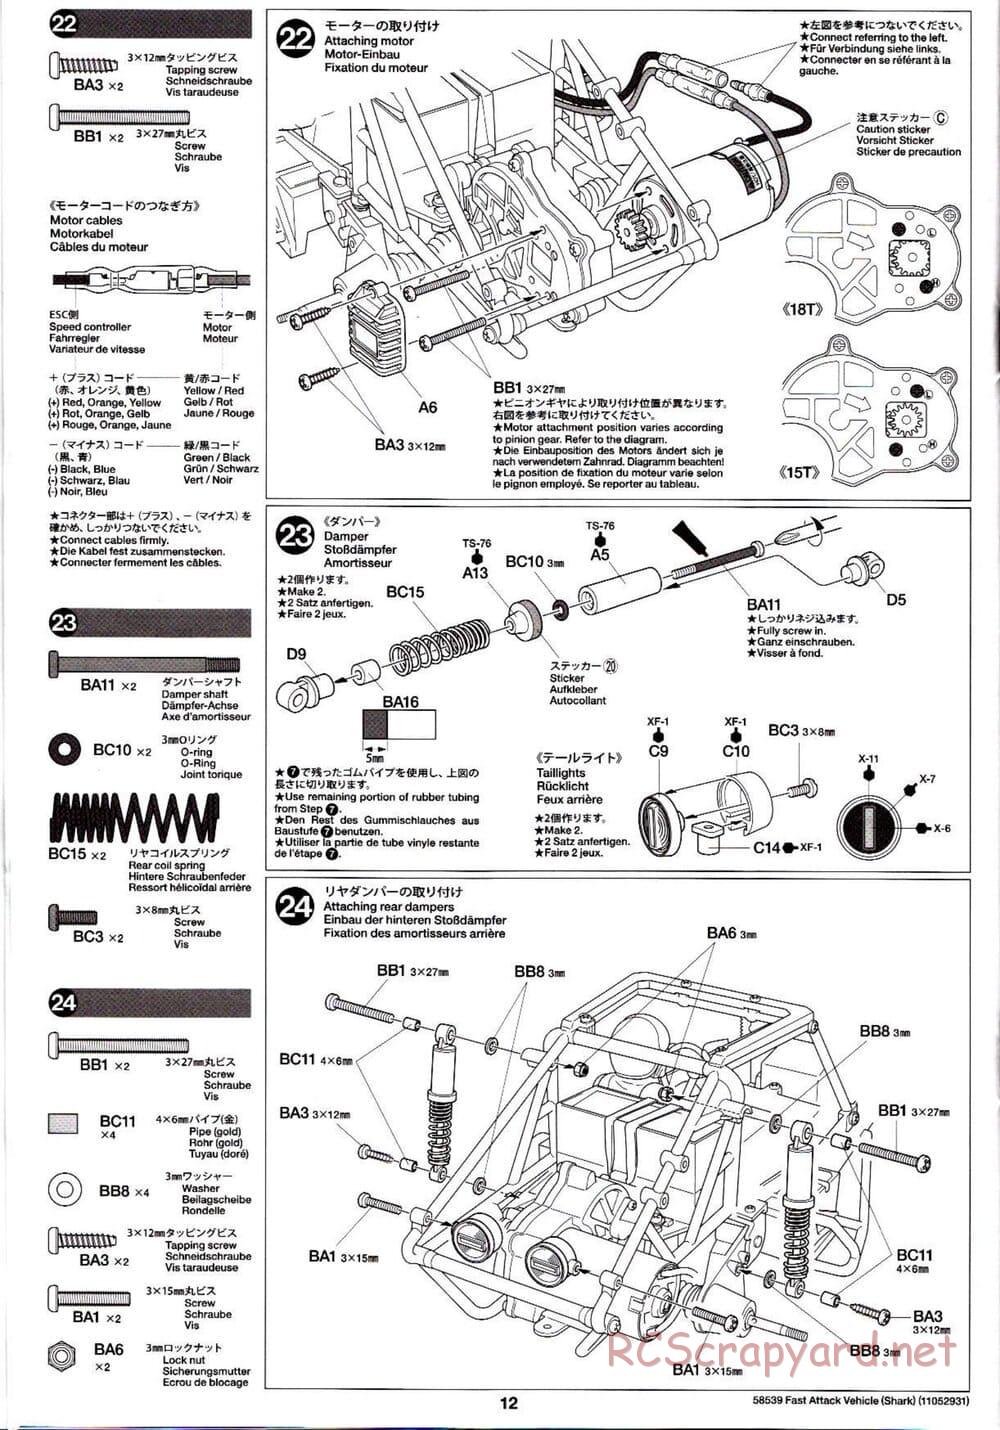 Tamiya - Fast Attack Vehicle w/ Shark Mouth - FAV Chassis - Manual - Page 12